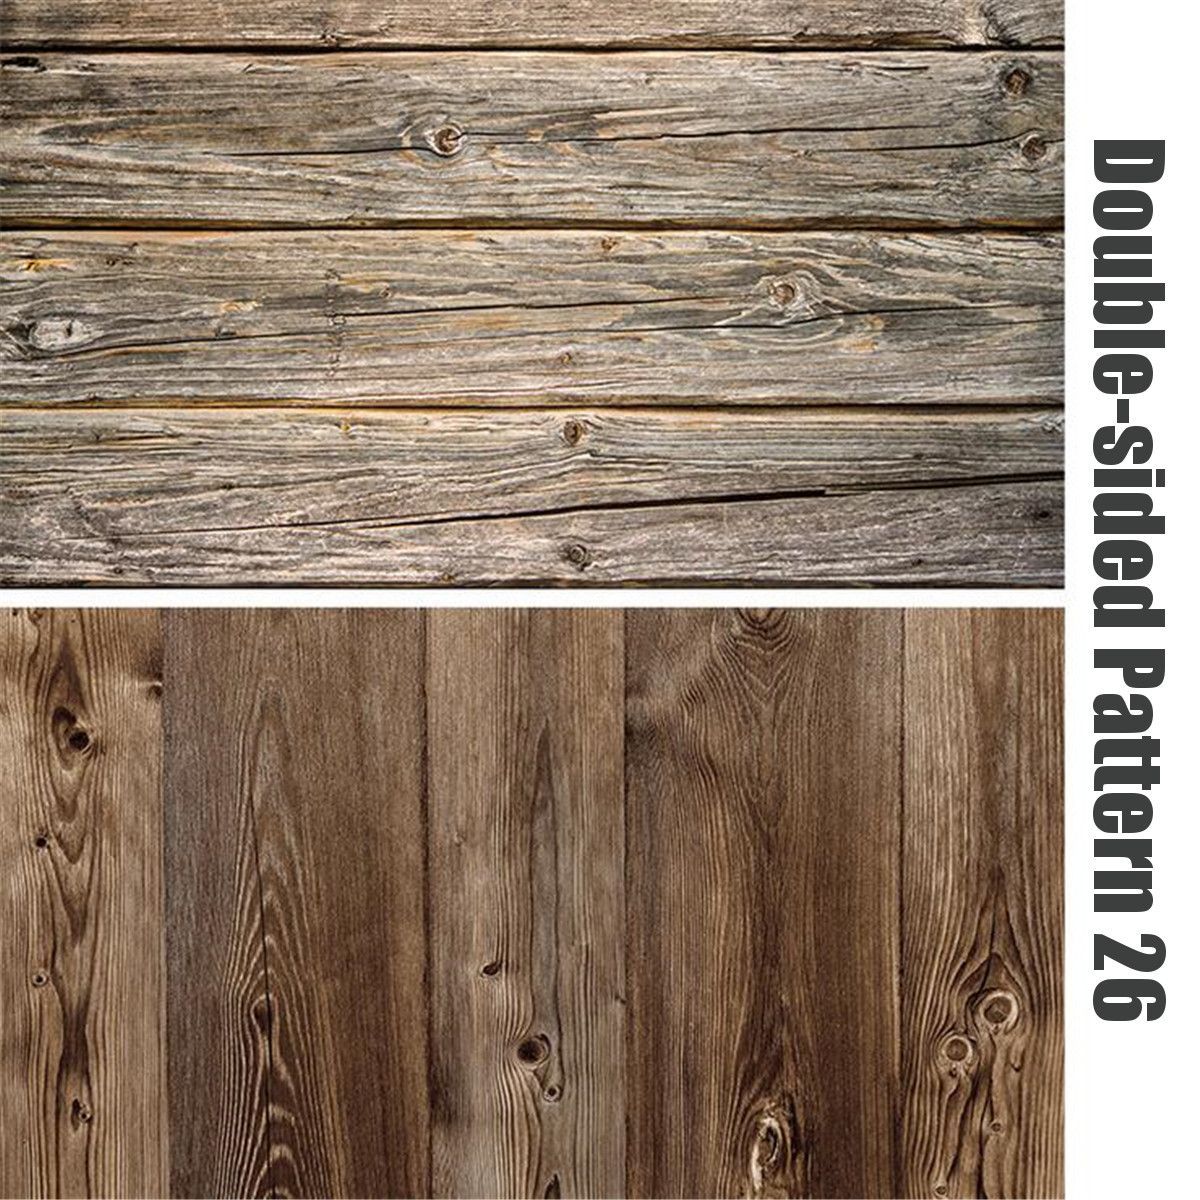 87x57cm-Double-Sided-Background-Waterproof-Wood-Grain-Photography-Studio-Backdrop-Photo-Prop-1707186